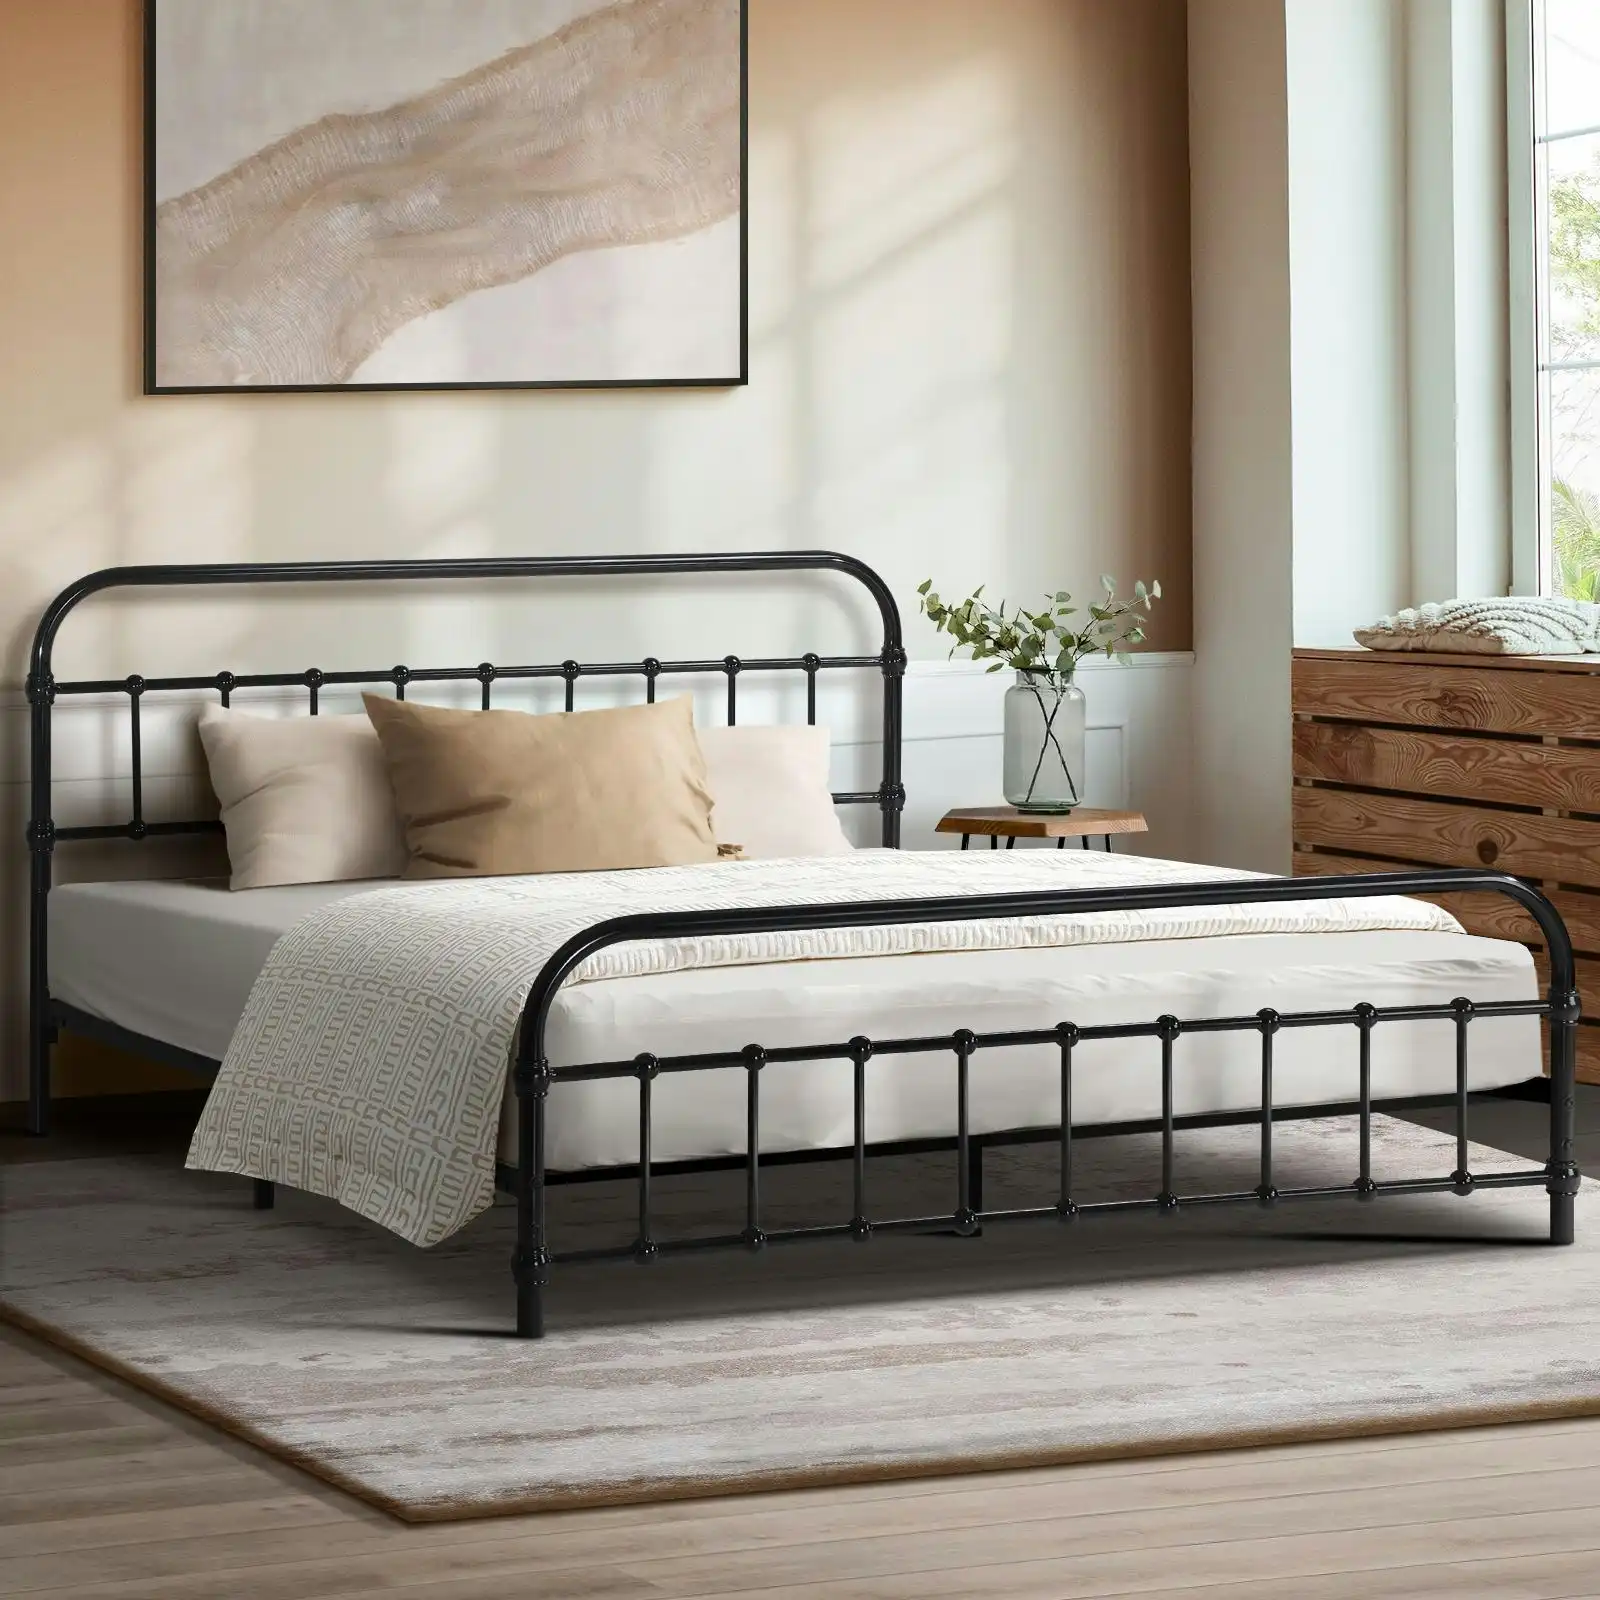 Oikiture Metal Bed Frame Queen Size Bed Base Platform